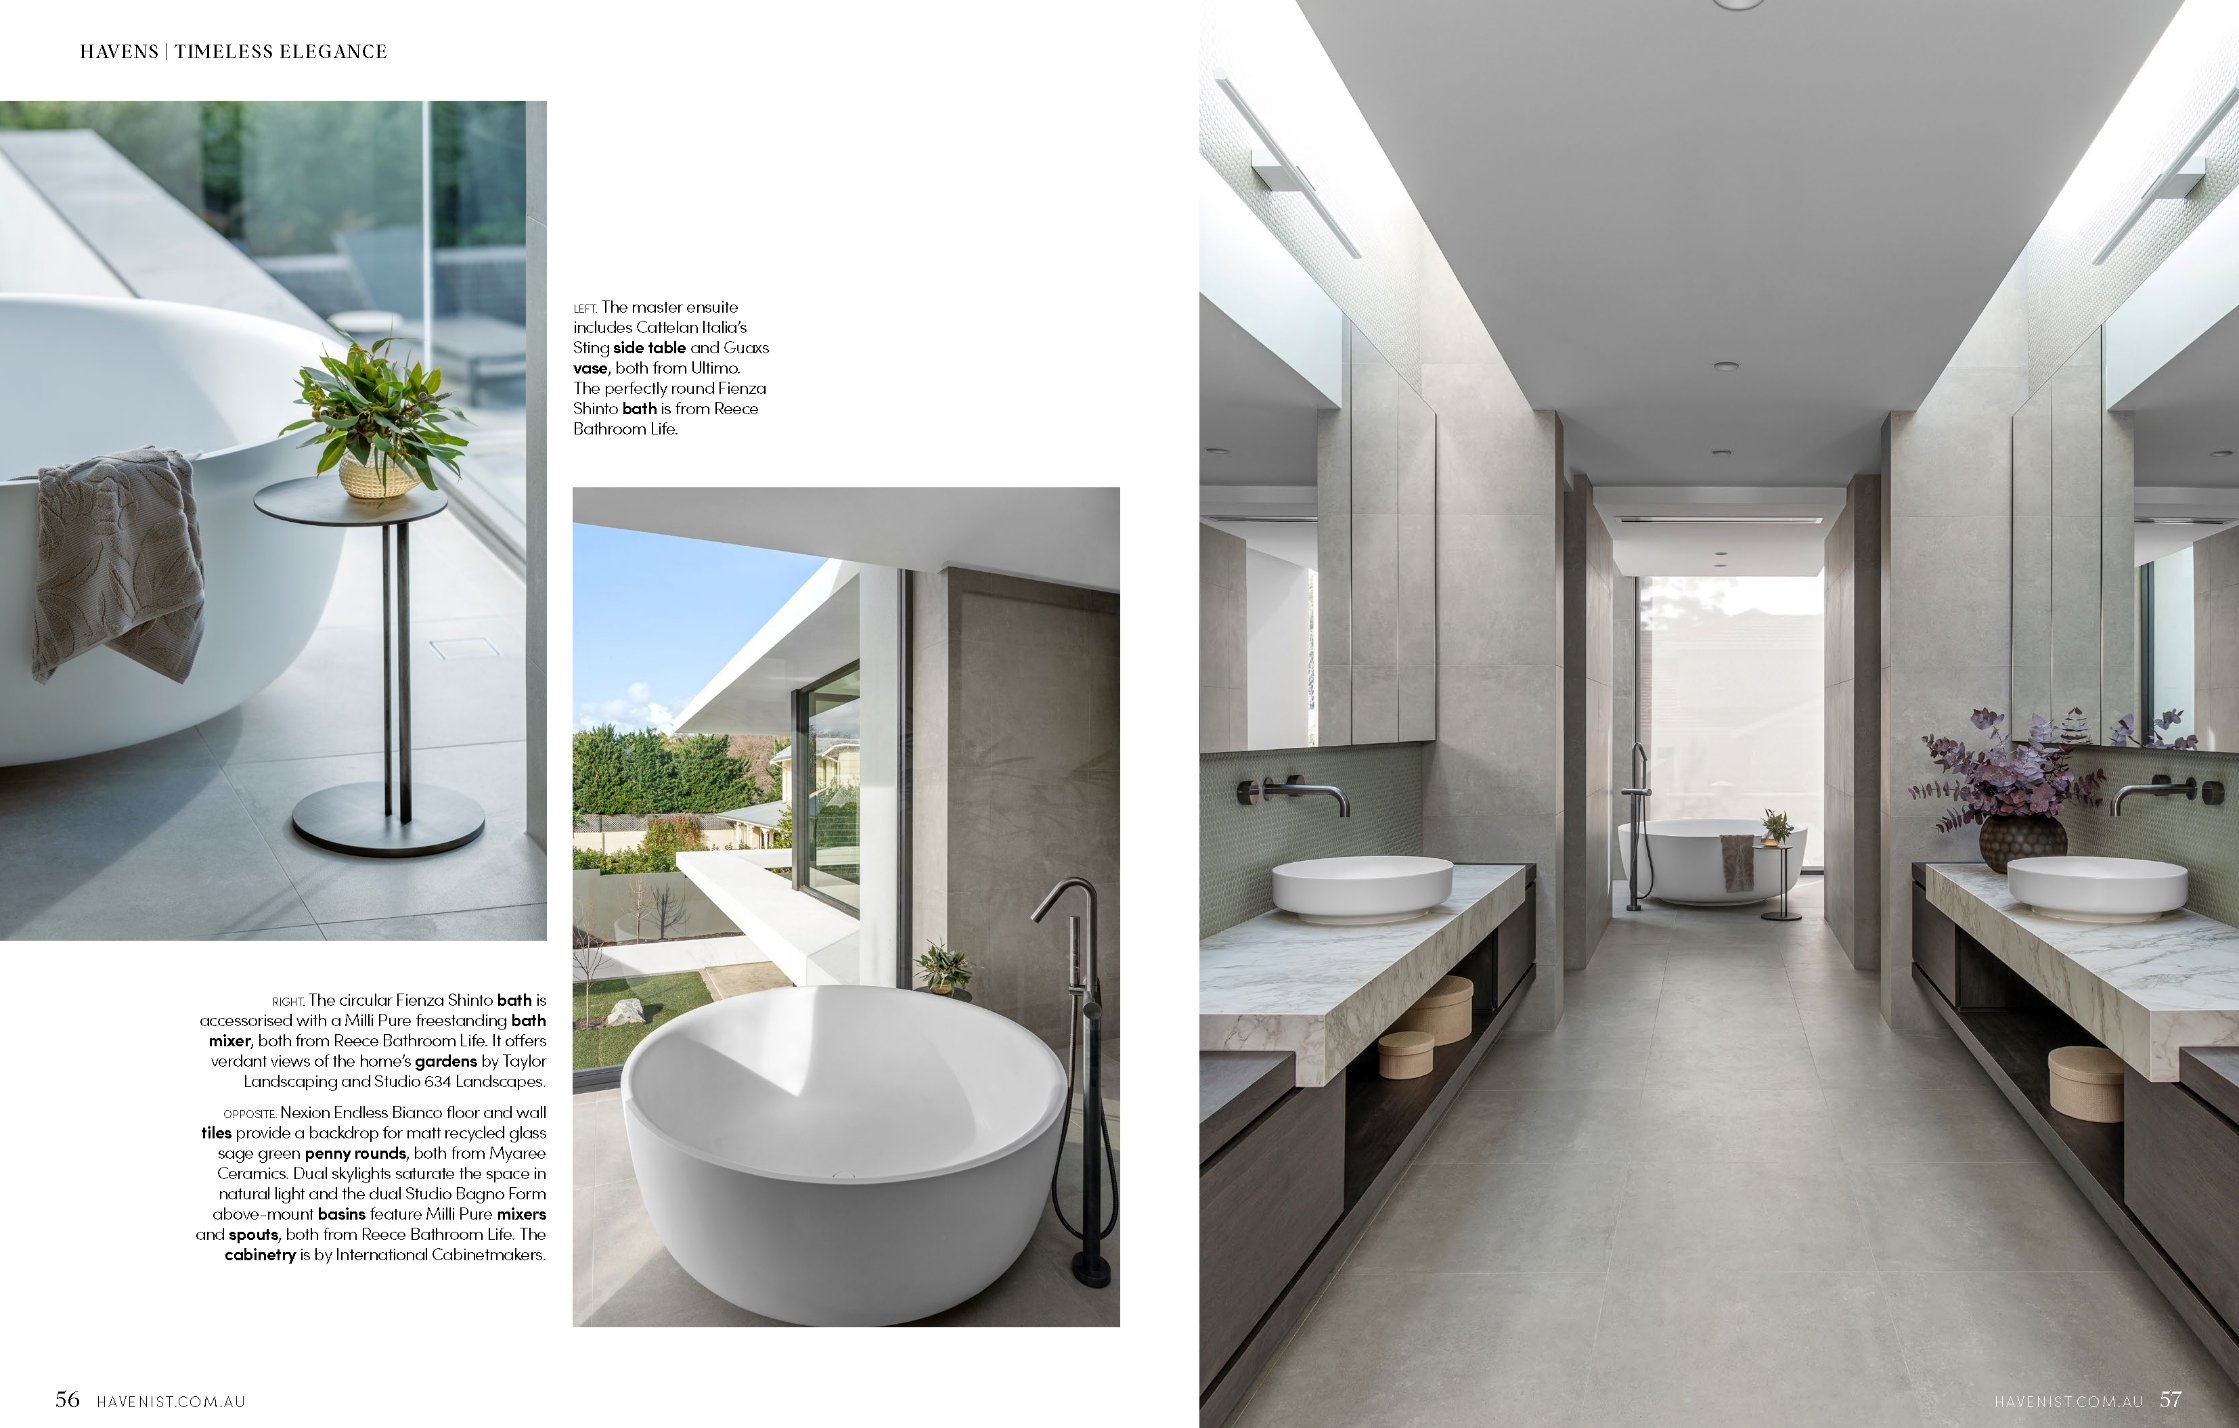 Modern bathroom design with elegant fixtures and natural light.